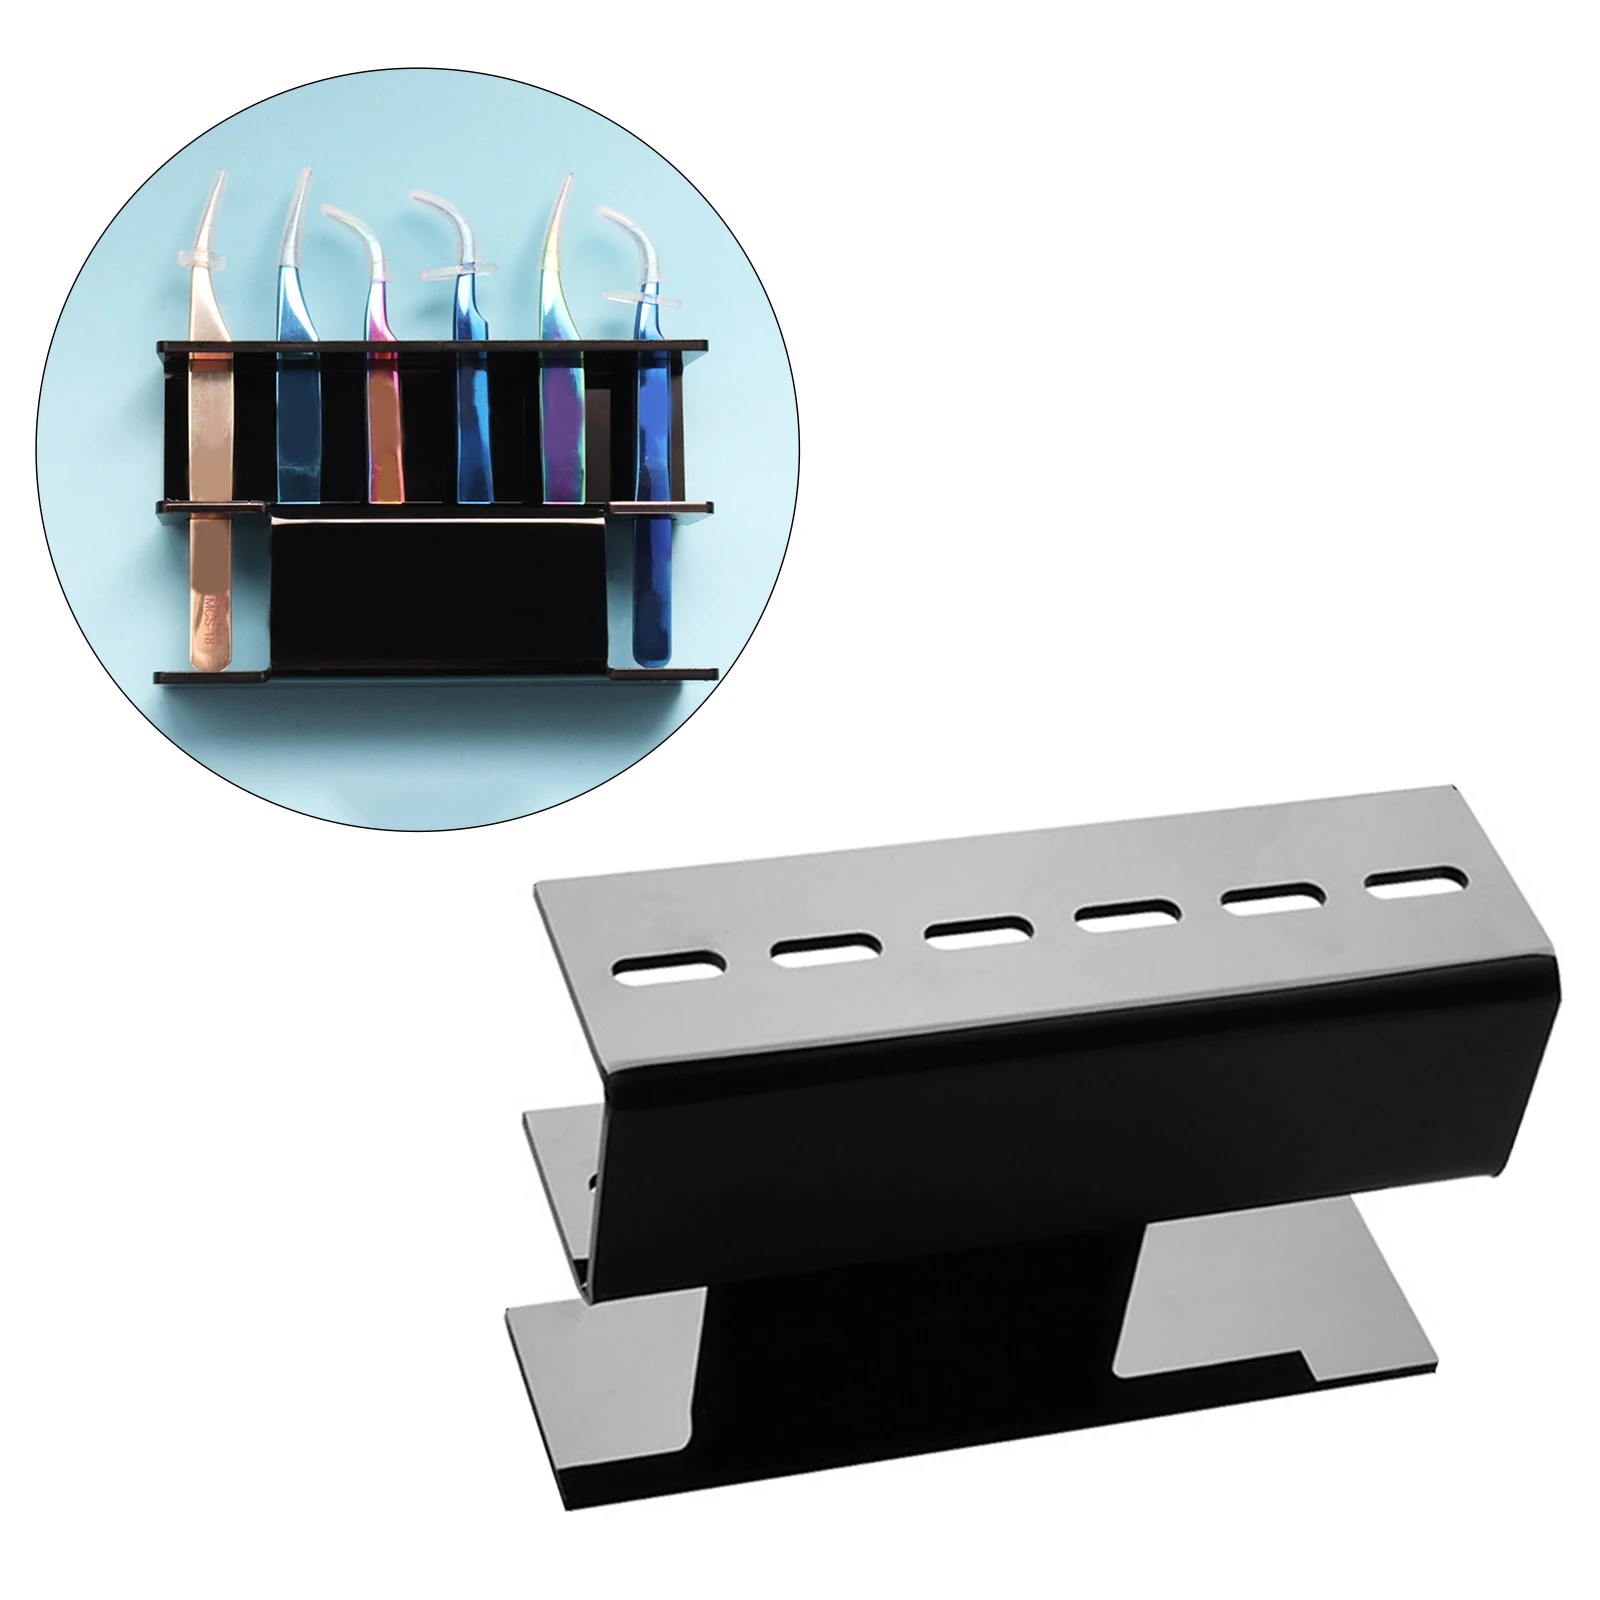 6 Holes Tweezers Stand Holder Storage Rack Acrylic Display Stand Salon Tools